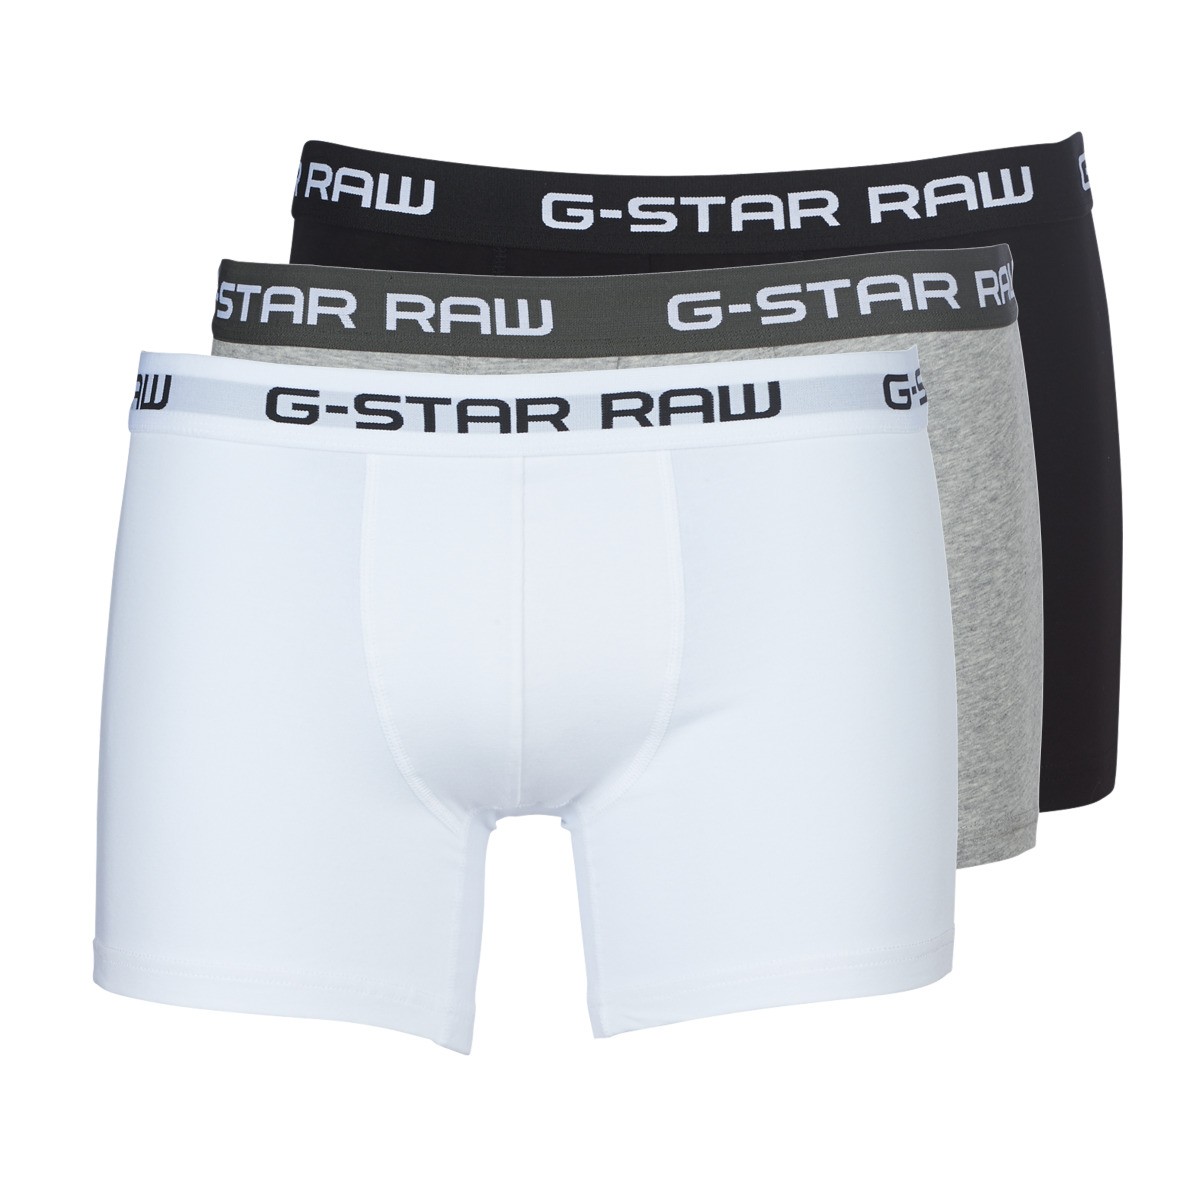 G-Star Raw Noir / Gris / Blanc CLASSIC TRUNK 3 PACK 9vt26va9